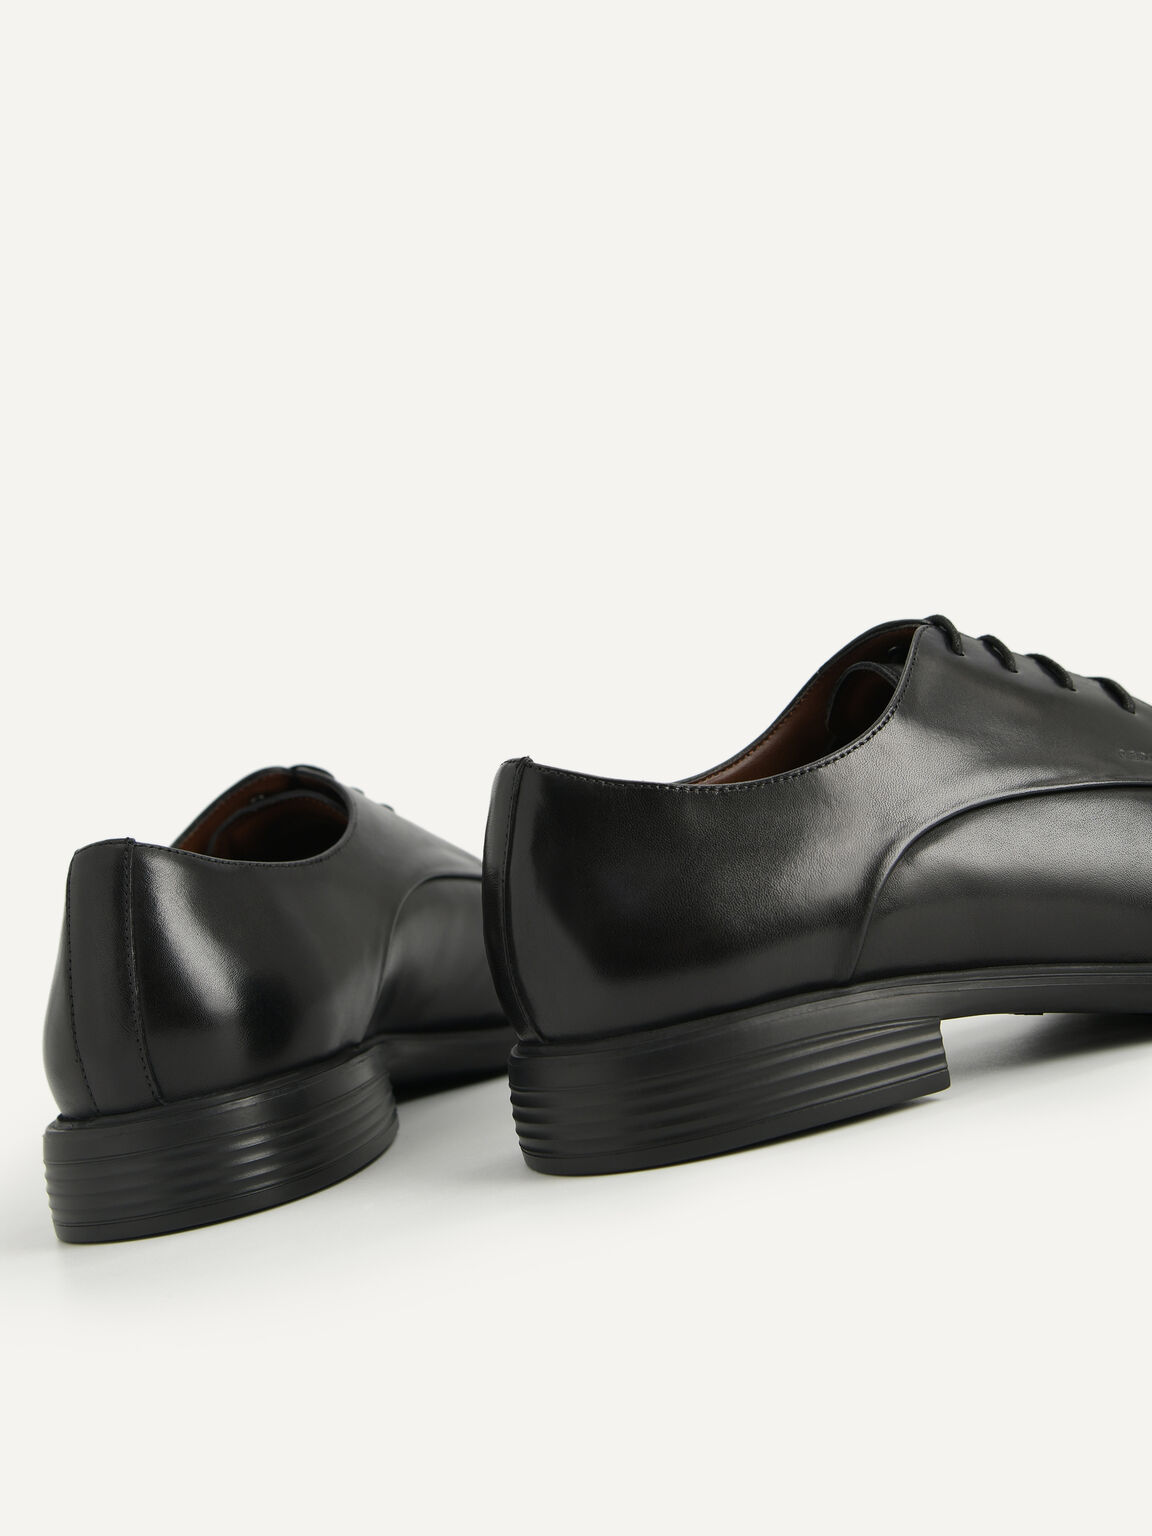 Altitude Leather Toe Derby Shoes, Black, hi-res